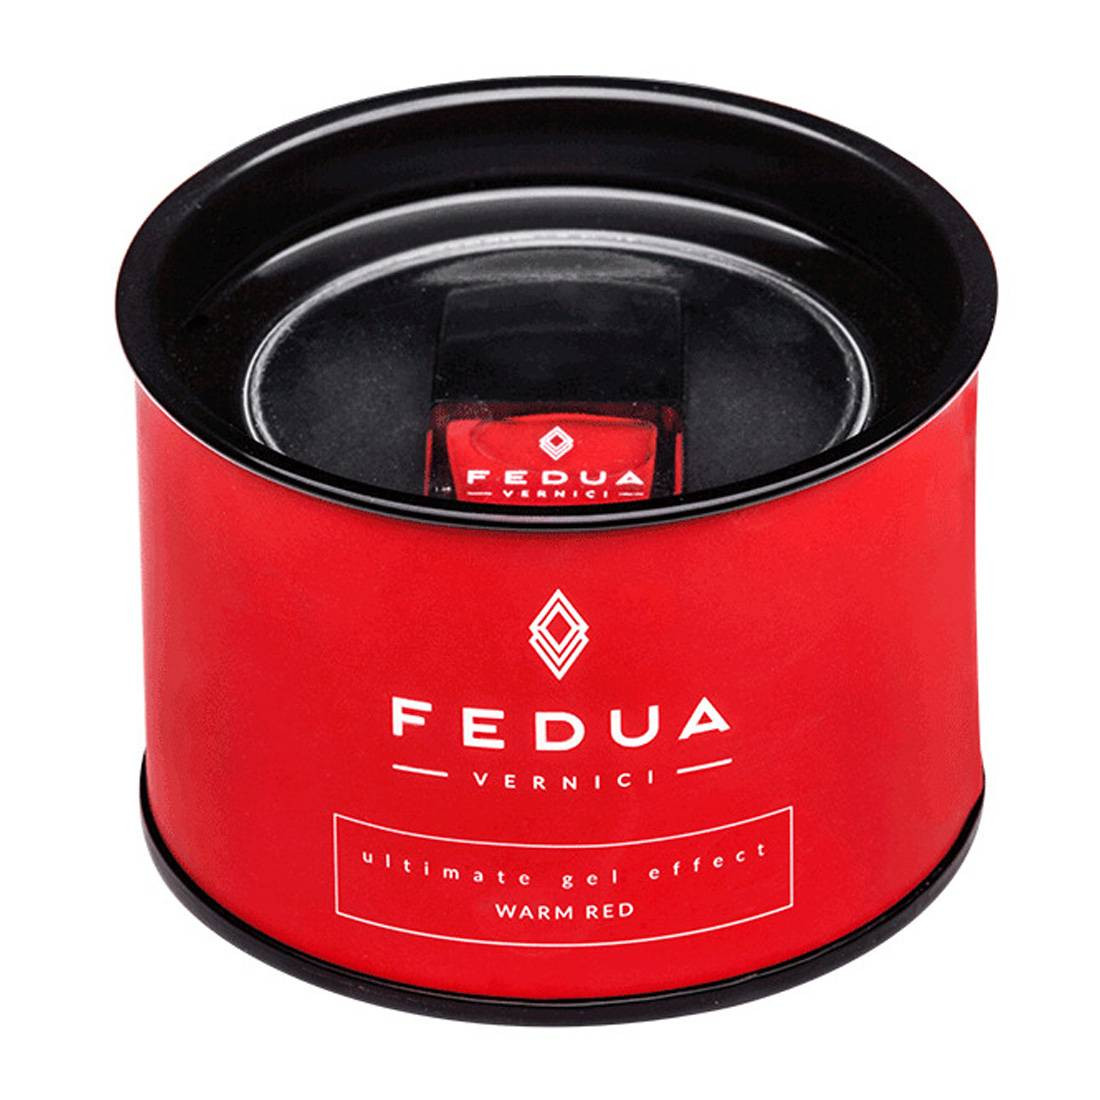 Fedua Vernici Ultimate Collection Warm Red - Лак для ногтей Теплый красный